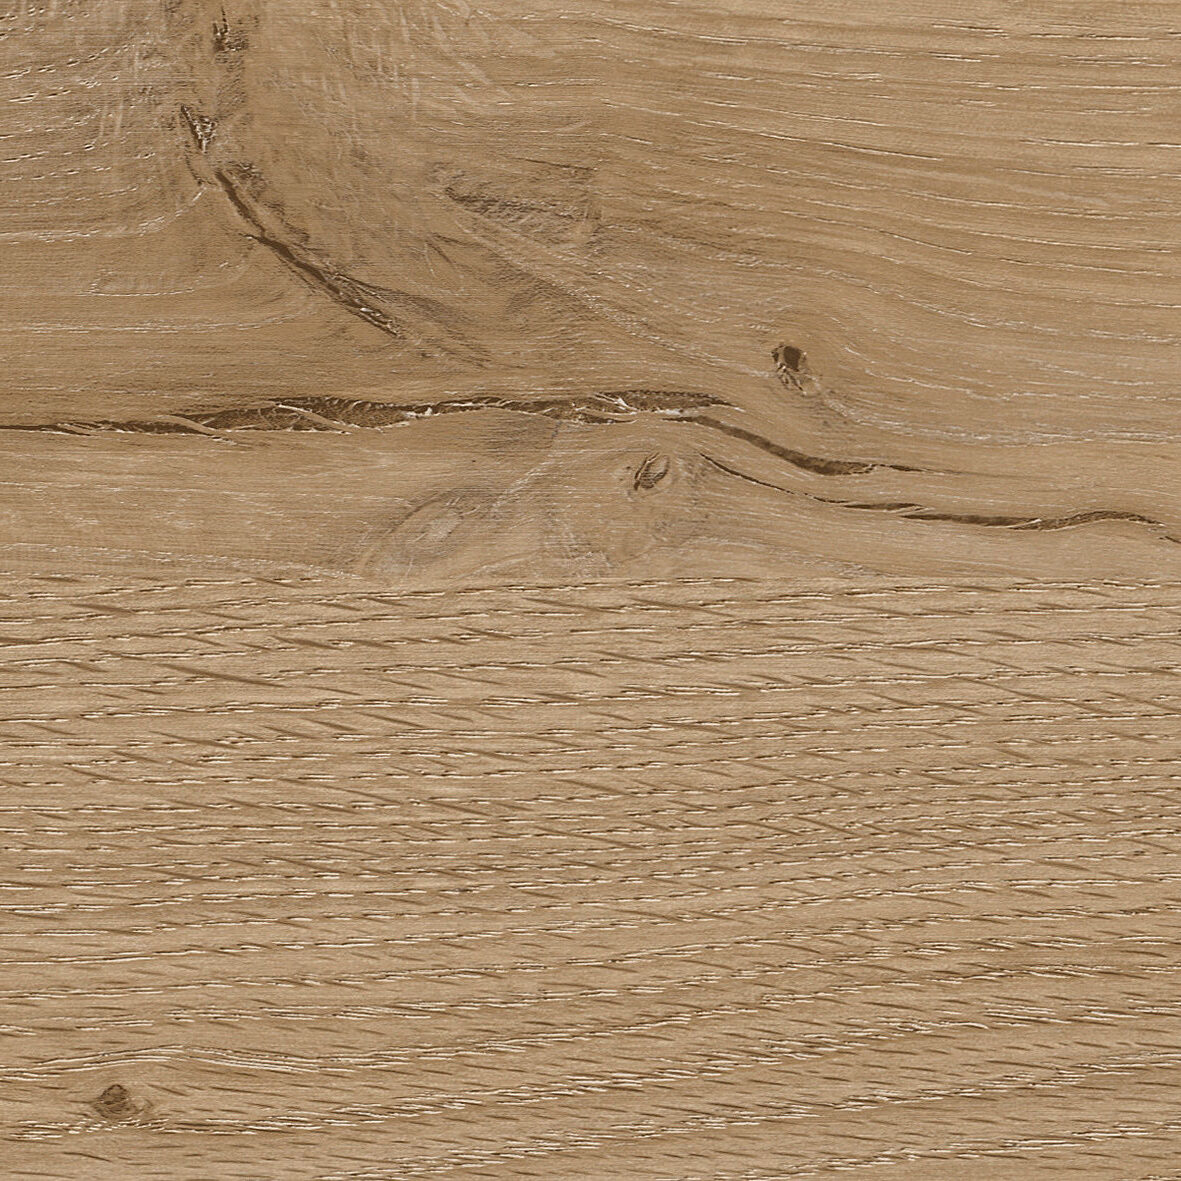 Balvenie oak sand / DU R20455 NW